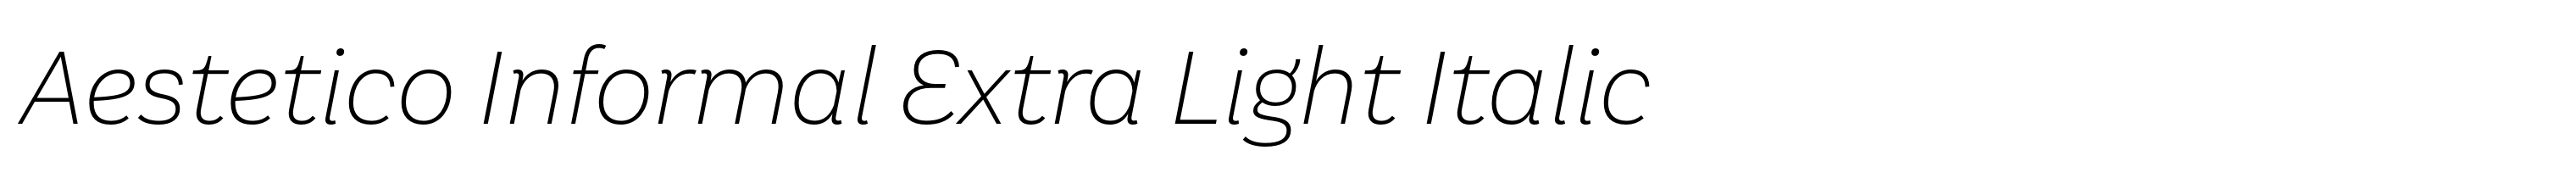 Aestetico Informal Extra Light Italic